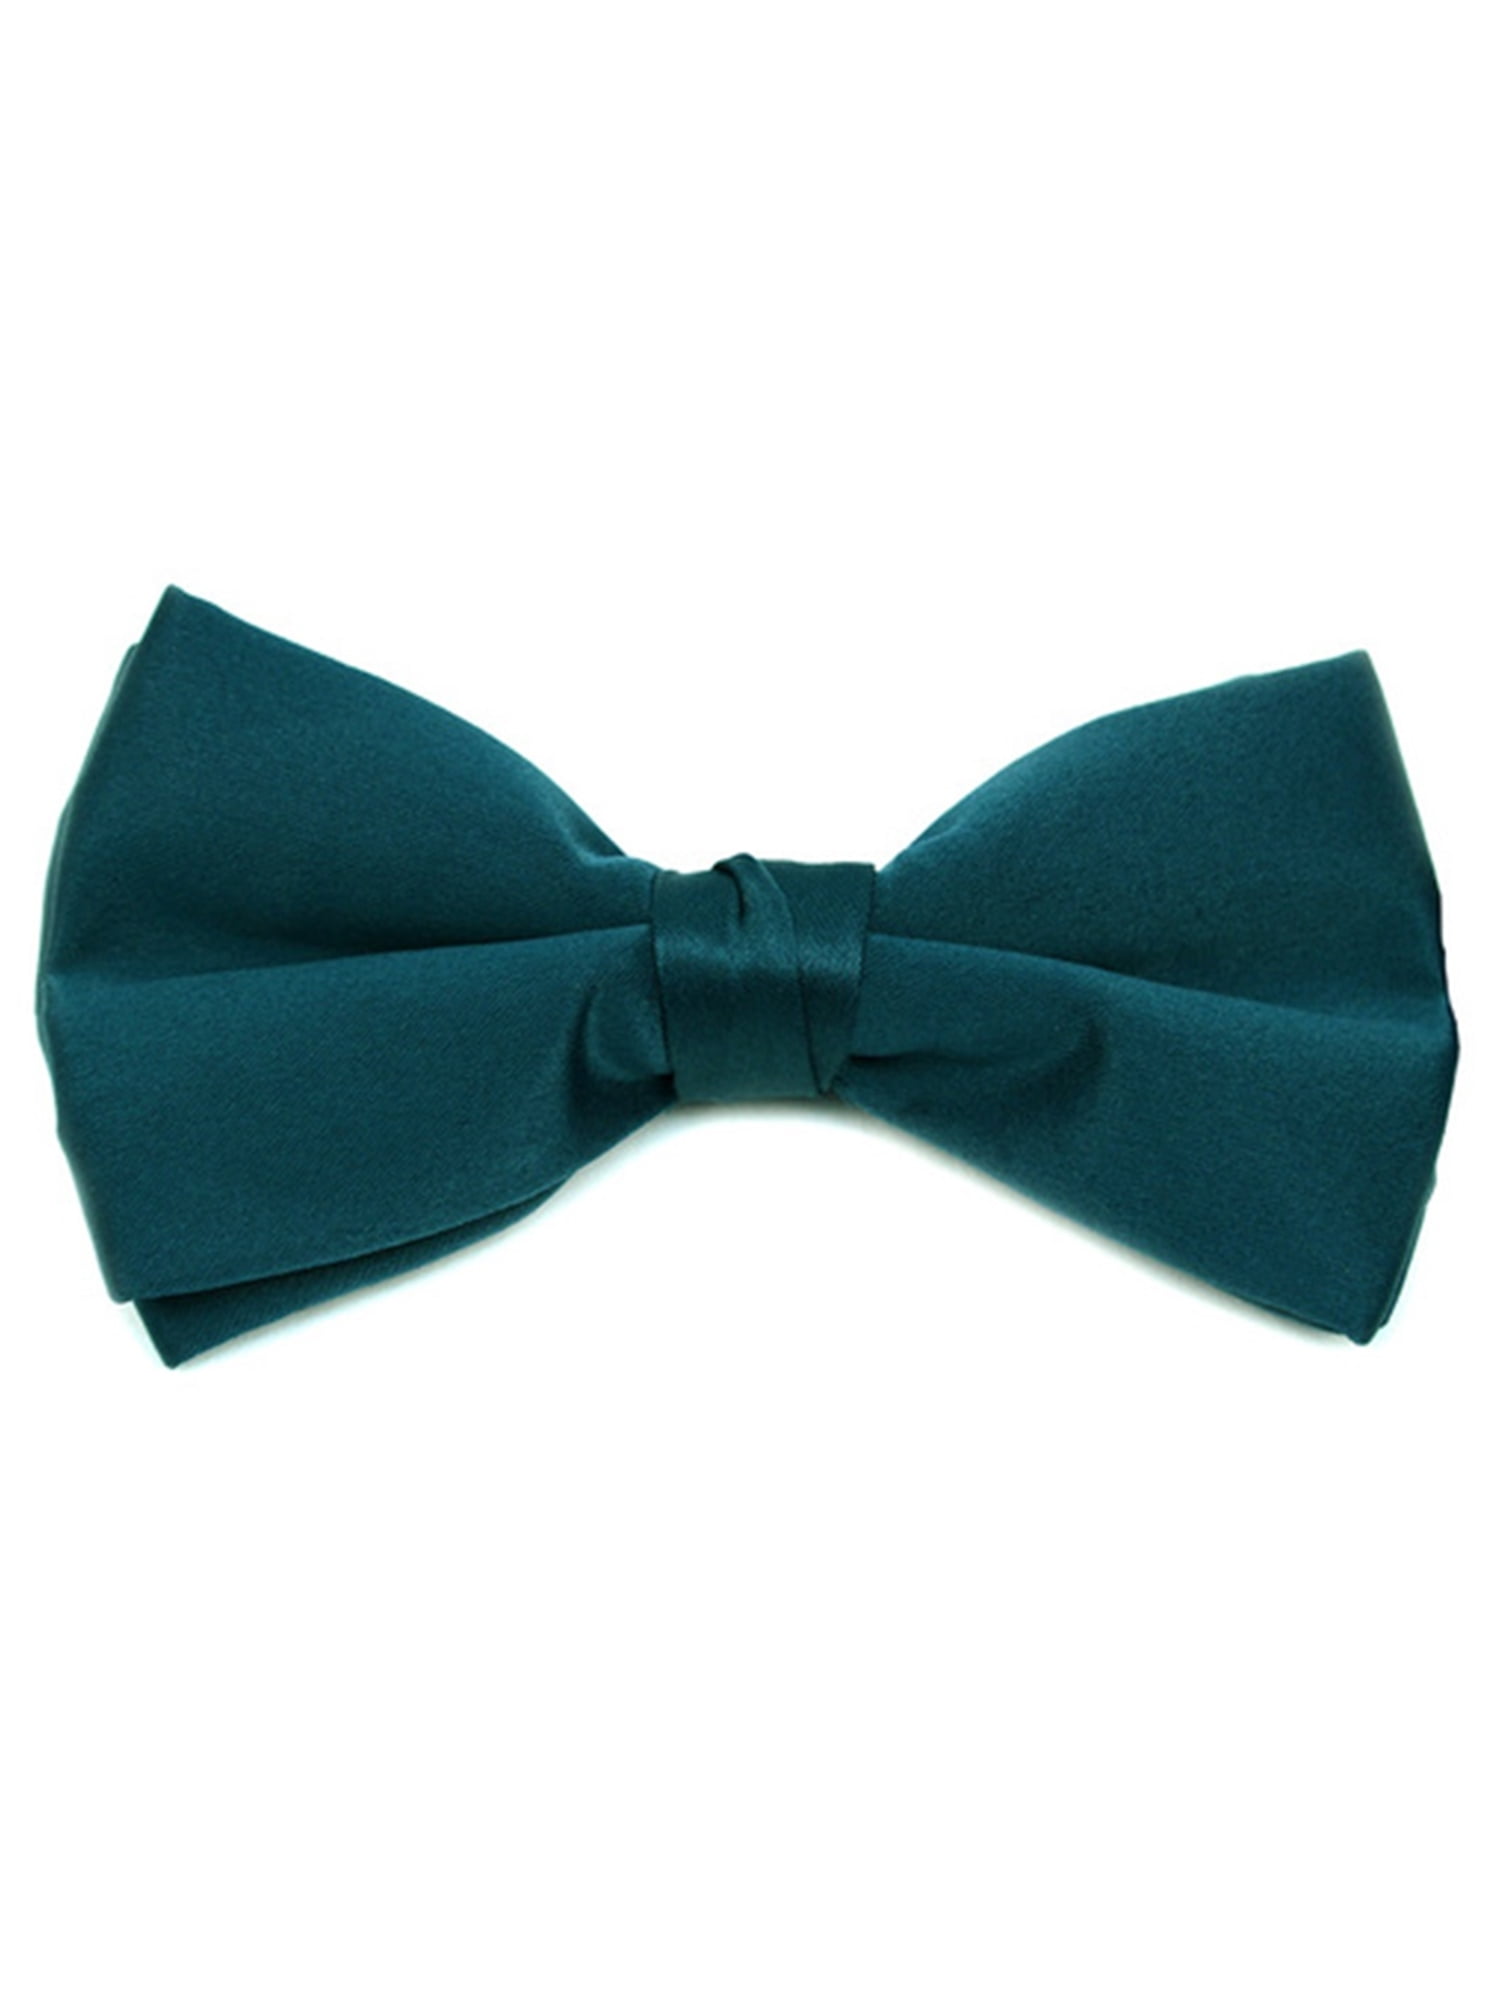 New Men's 100% Polyester Solid Formal Self-tied Bow Tie & hankie set aqua blue 